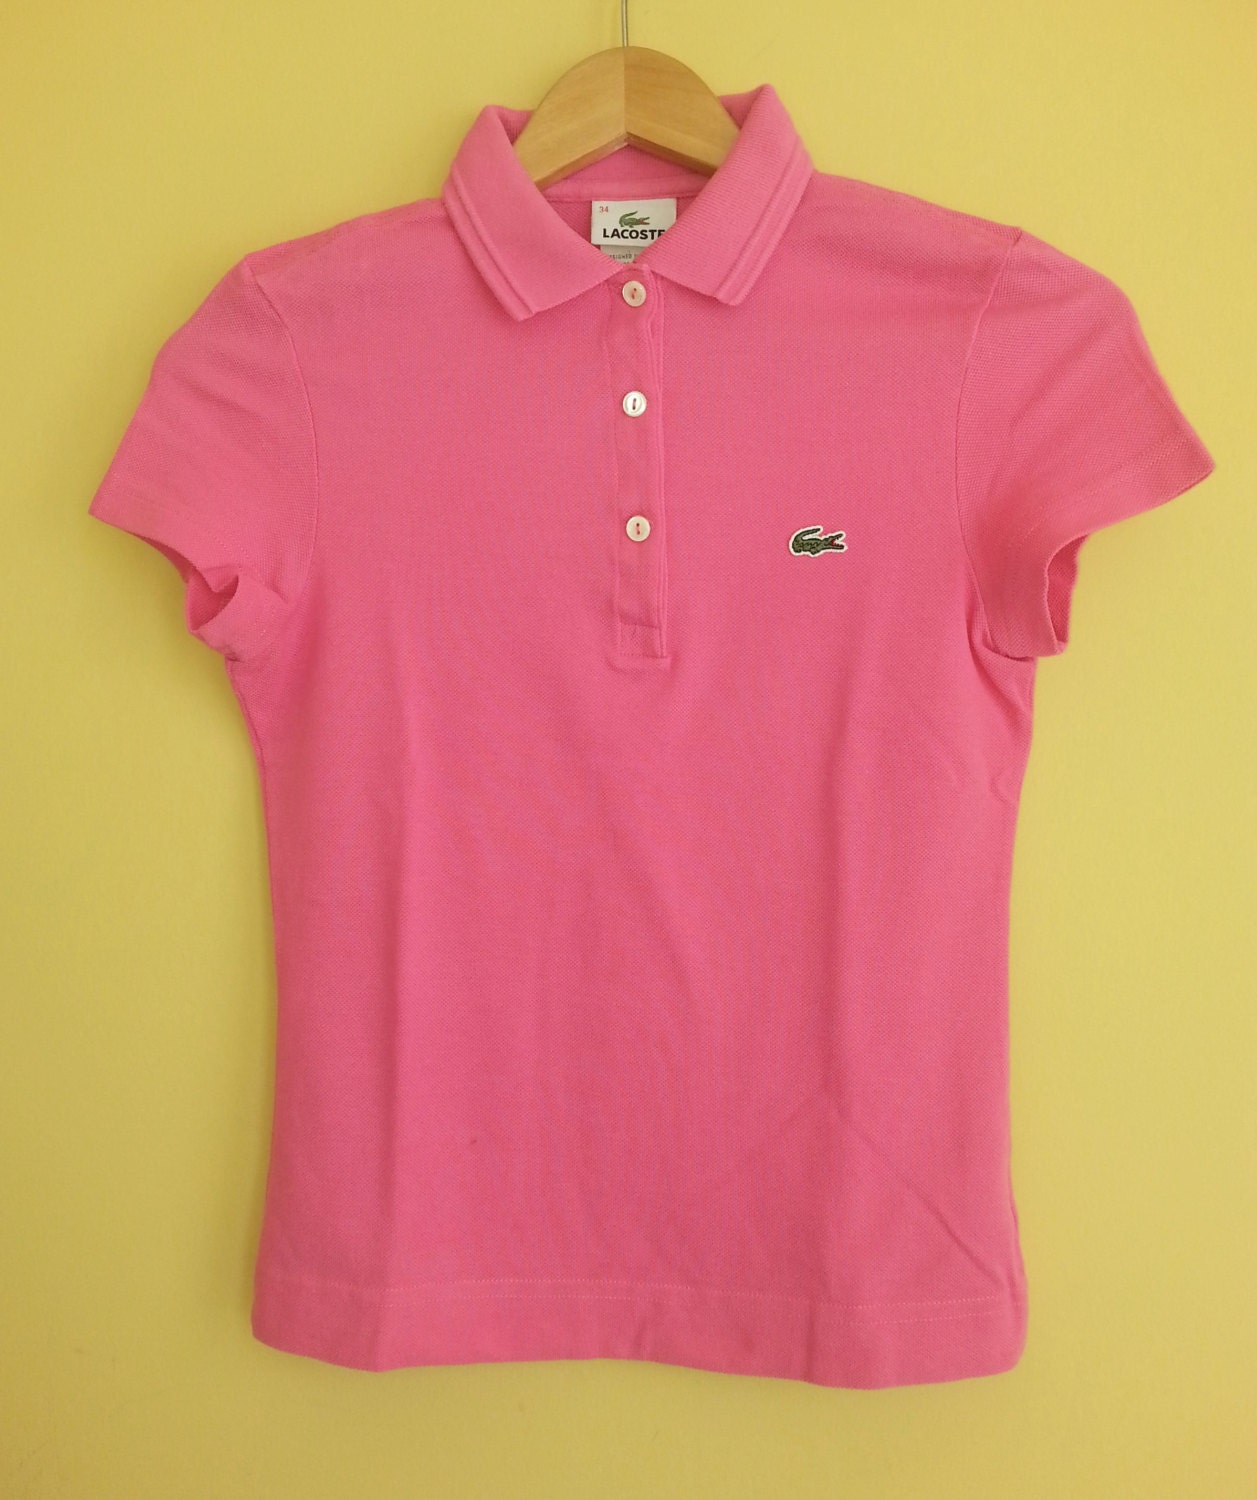 Lacoste Polo women's pink shirt size EUR by VintagePursesPlus